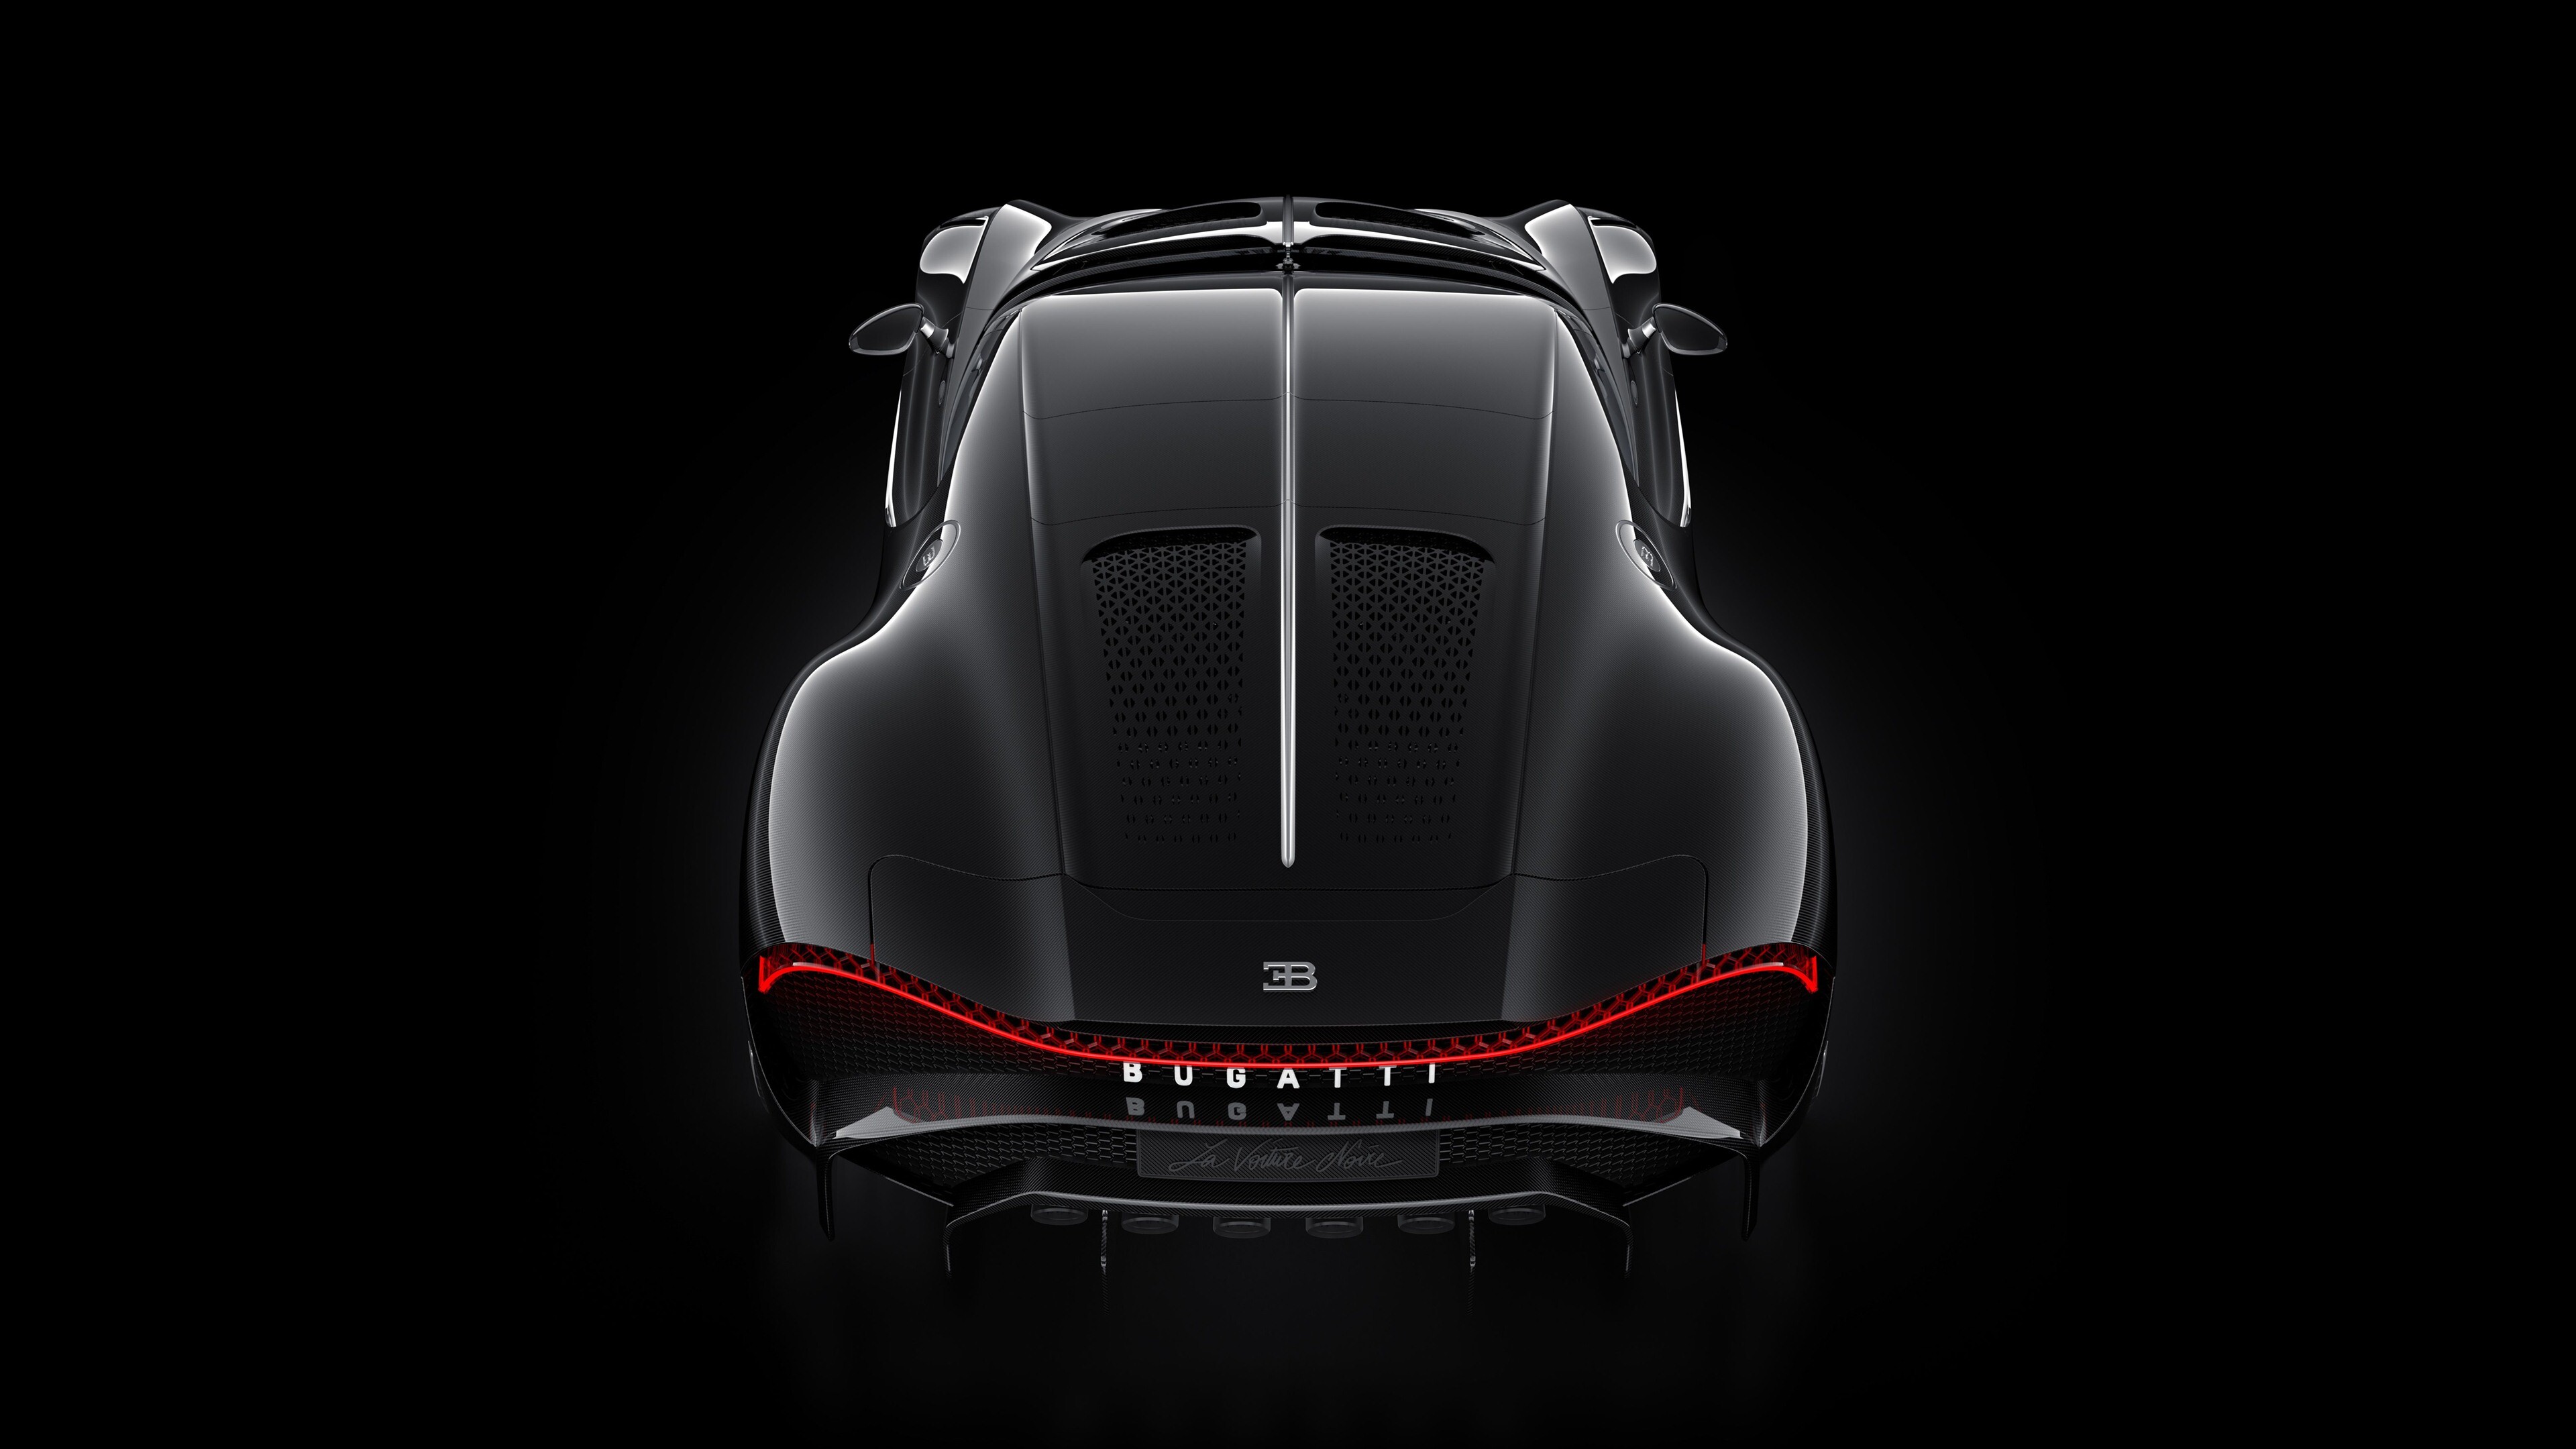 Bugatti La Voiture Noire: A luxury prototype hypercar, unveiled at the 2019 Geneva Motor Show. 3840x2160 4K Wallpaper.